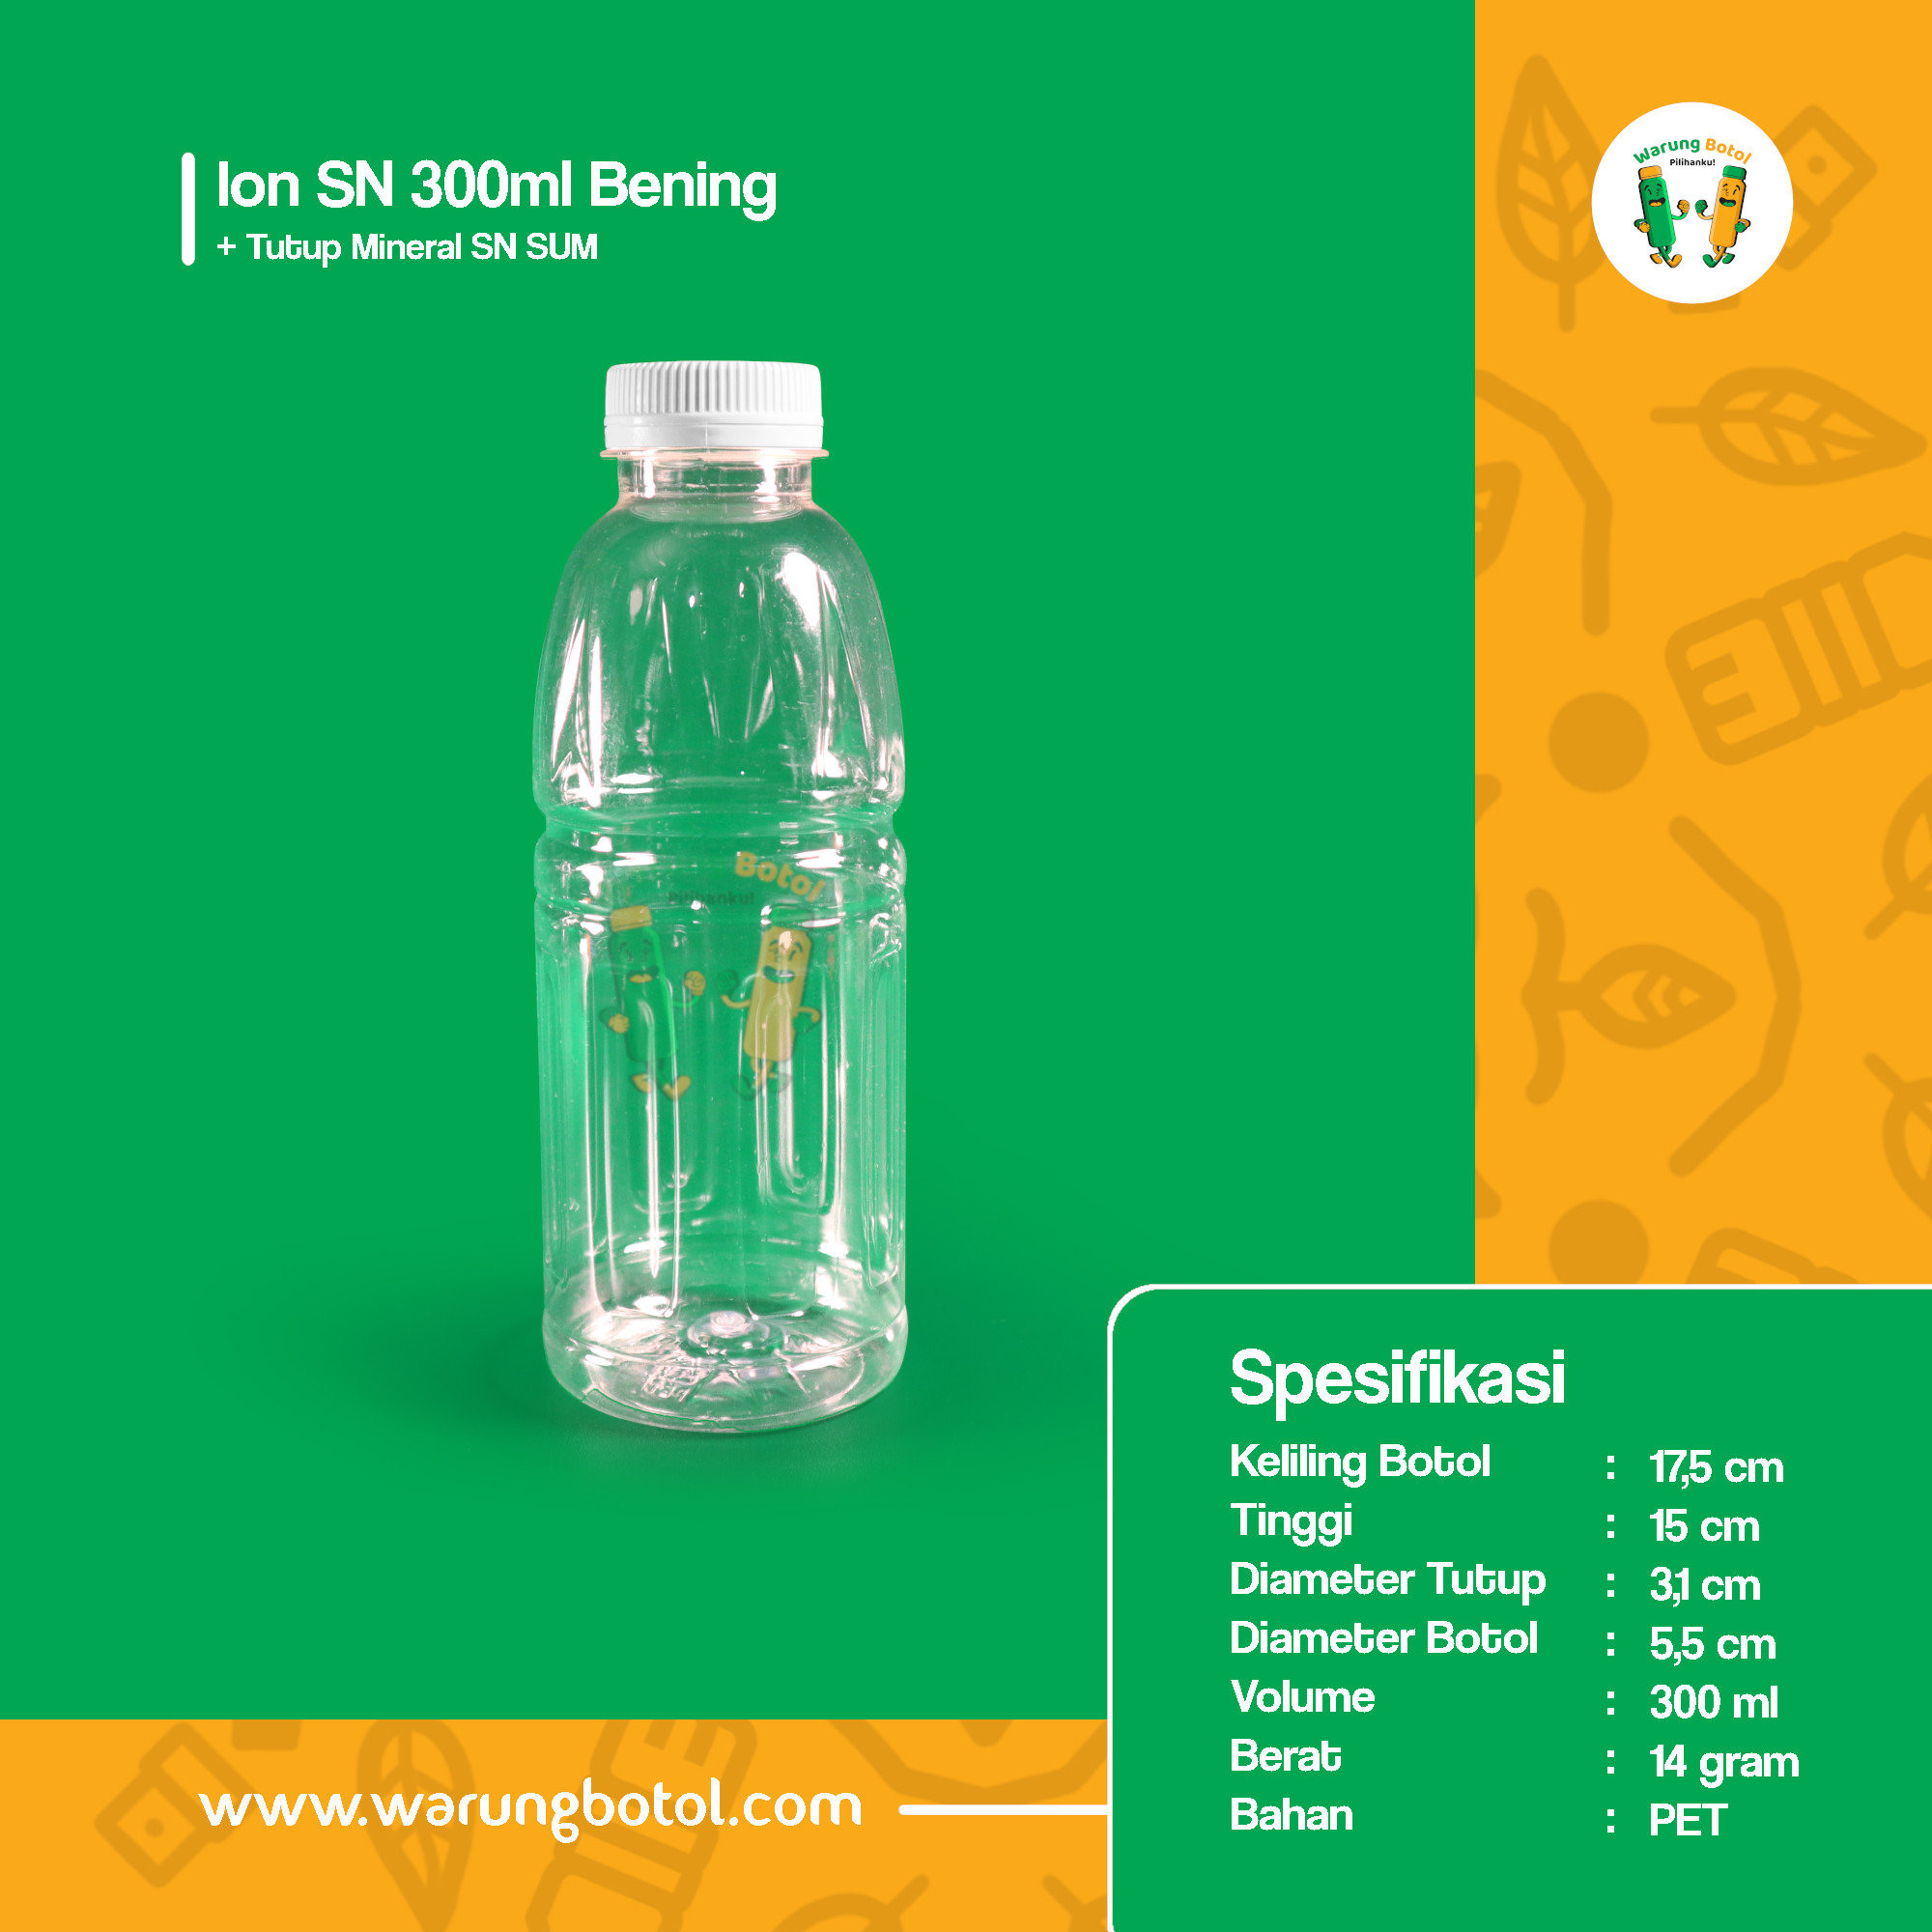 distributor jual botol plastik minuman unik 300ml bening murah terdekat bandung jakarta bogor bekasi